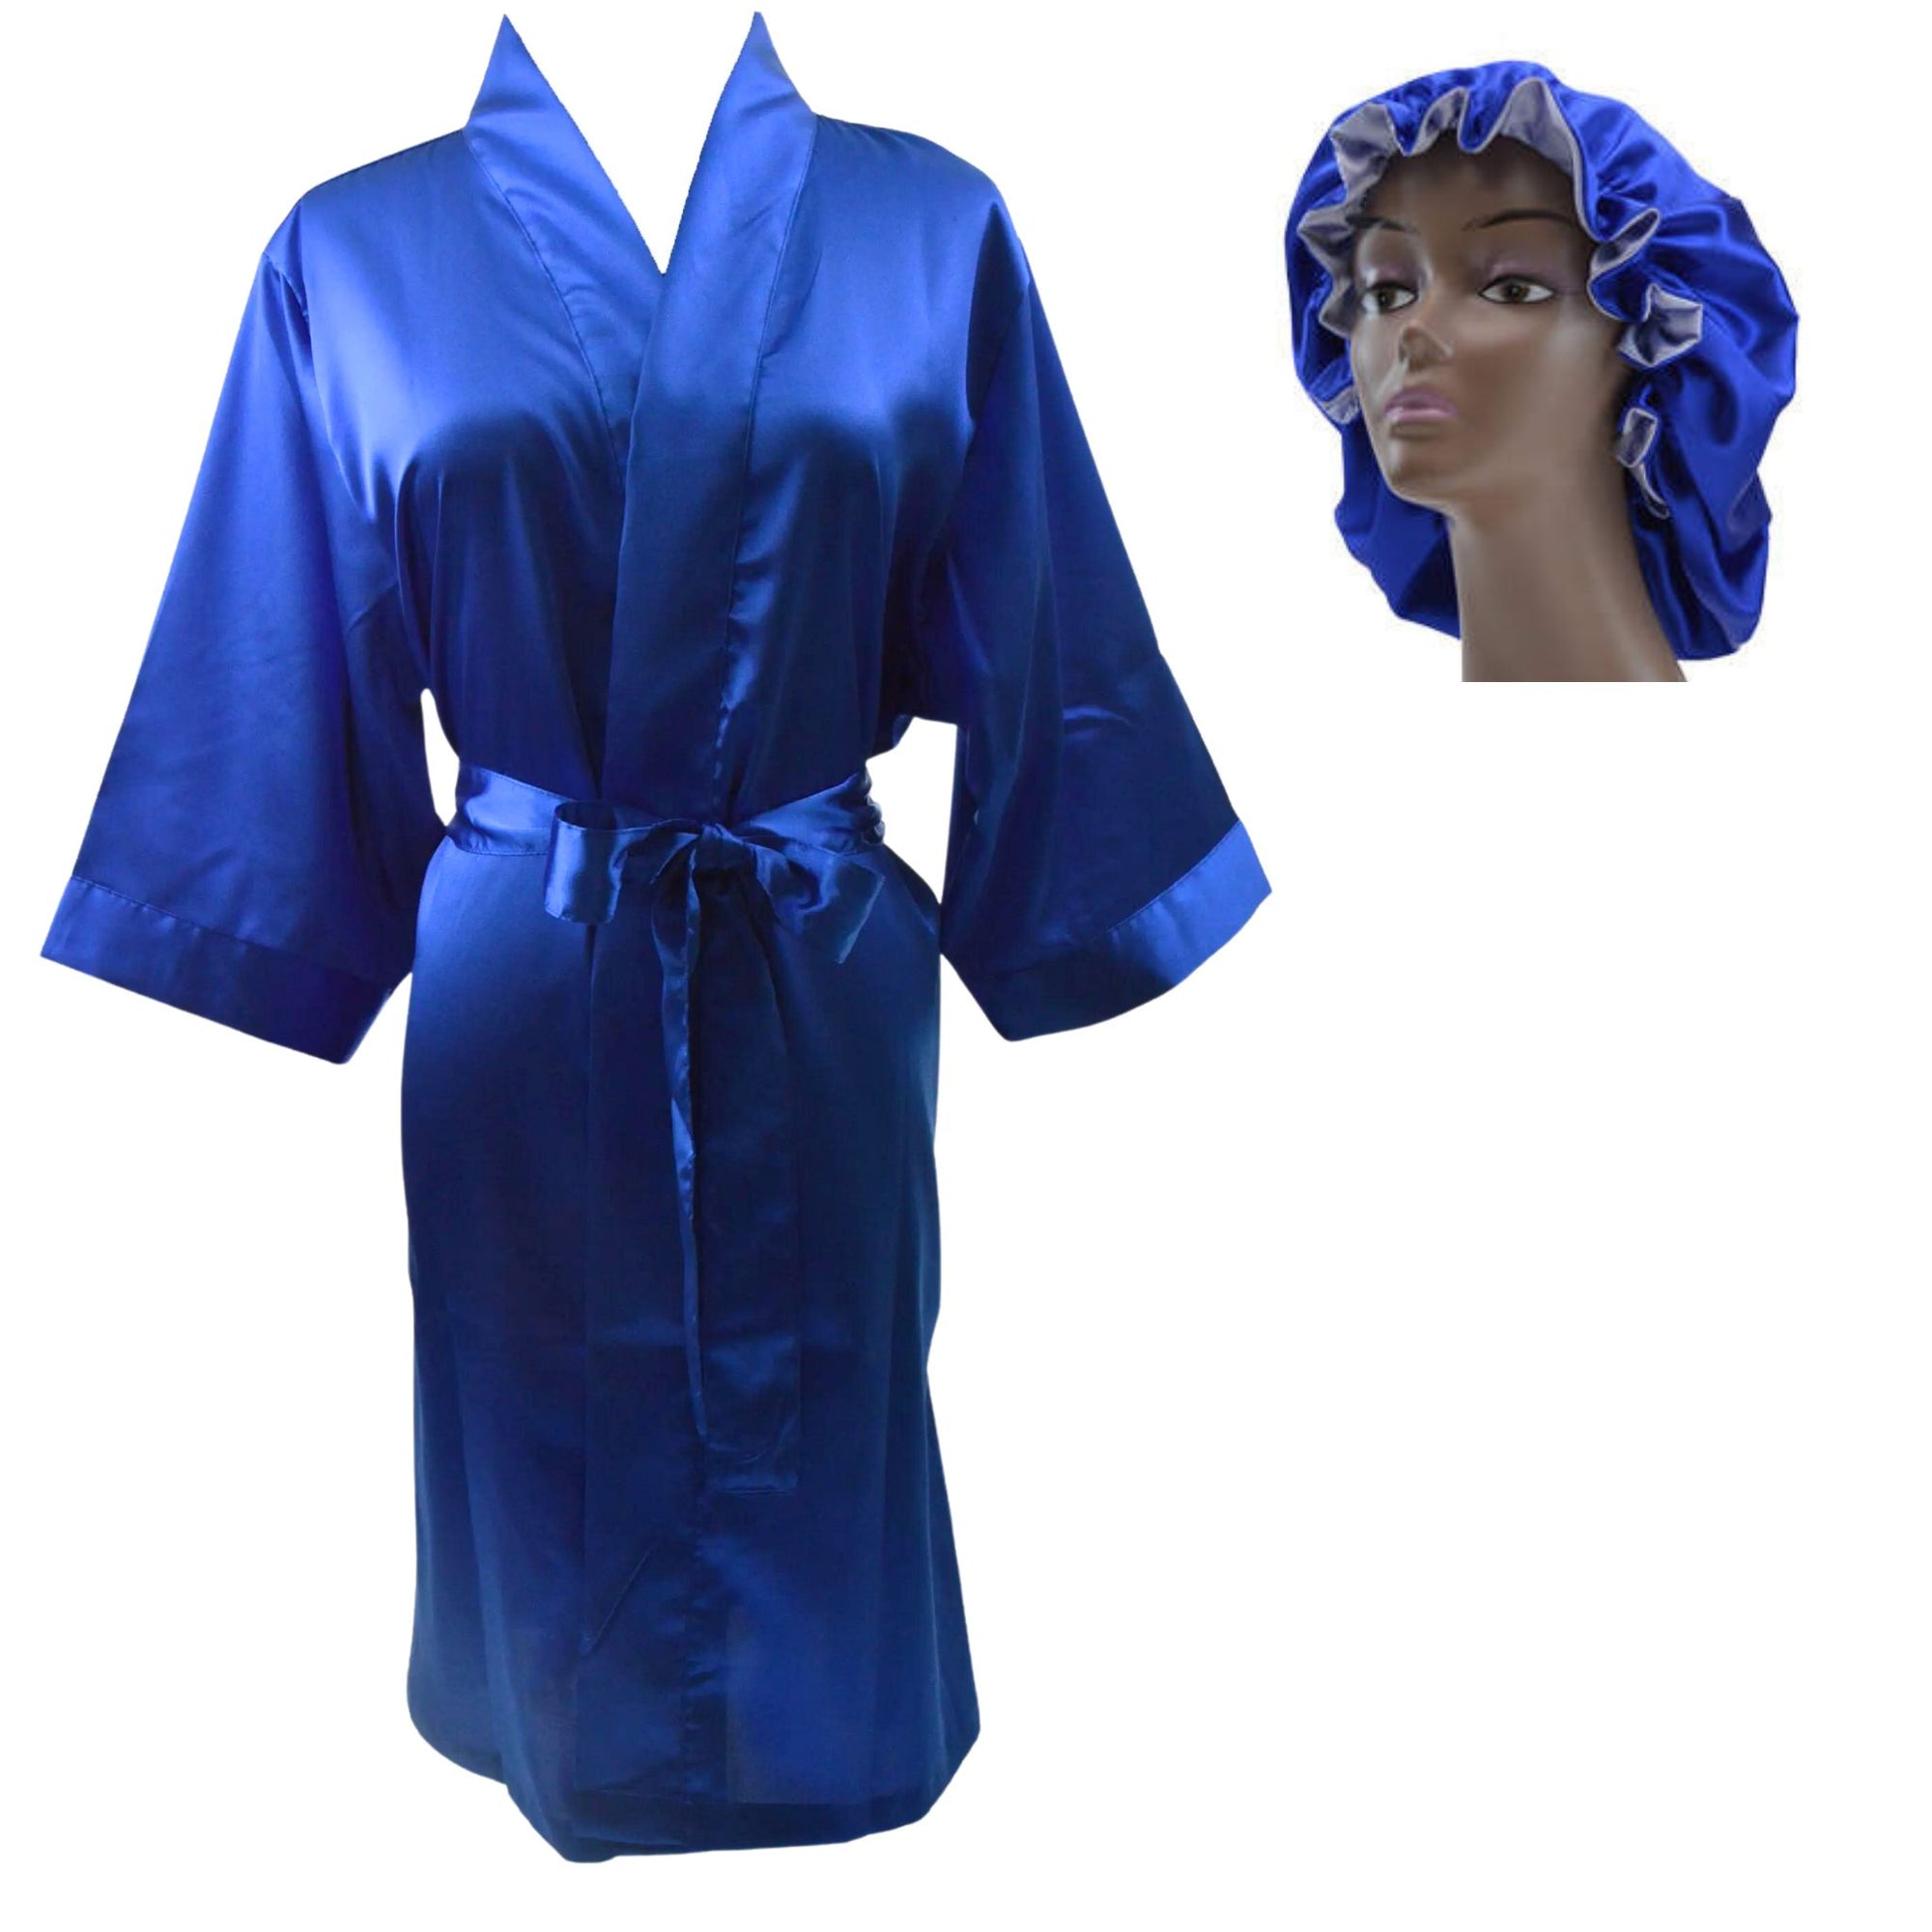 Women's Silky Satin Robe and matching bonnet set